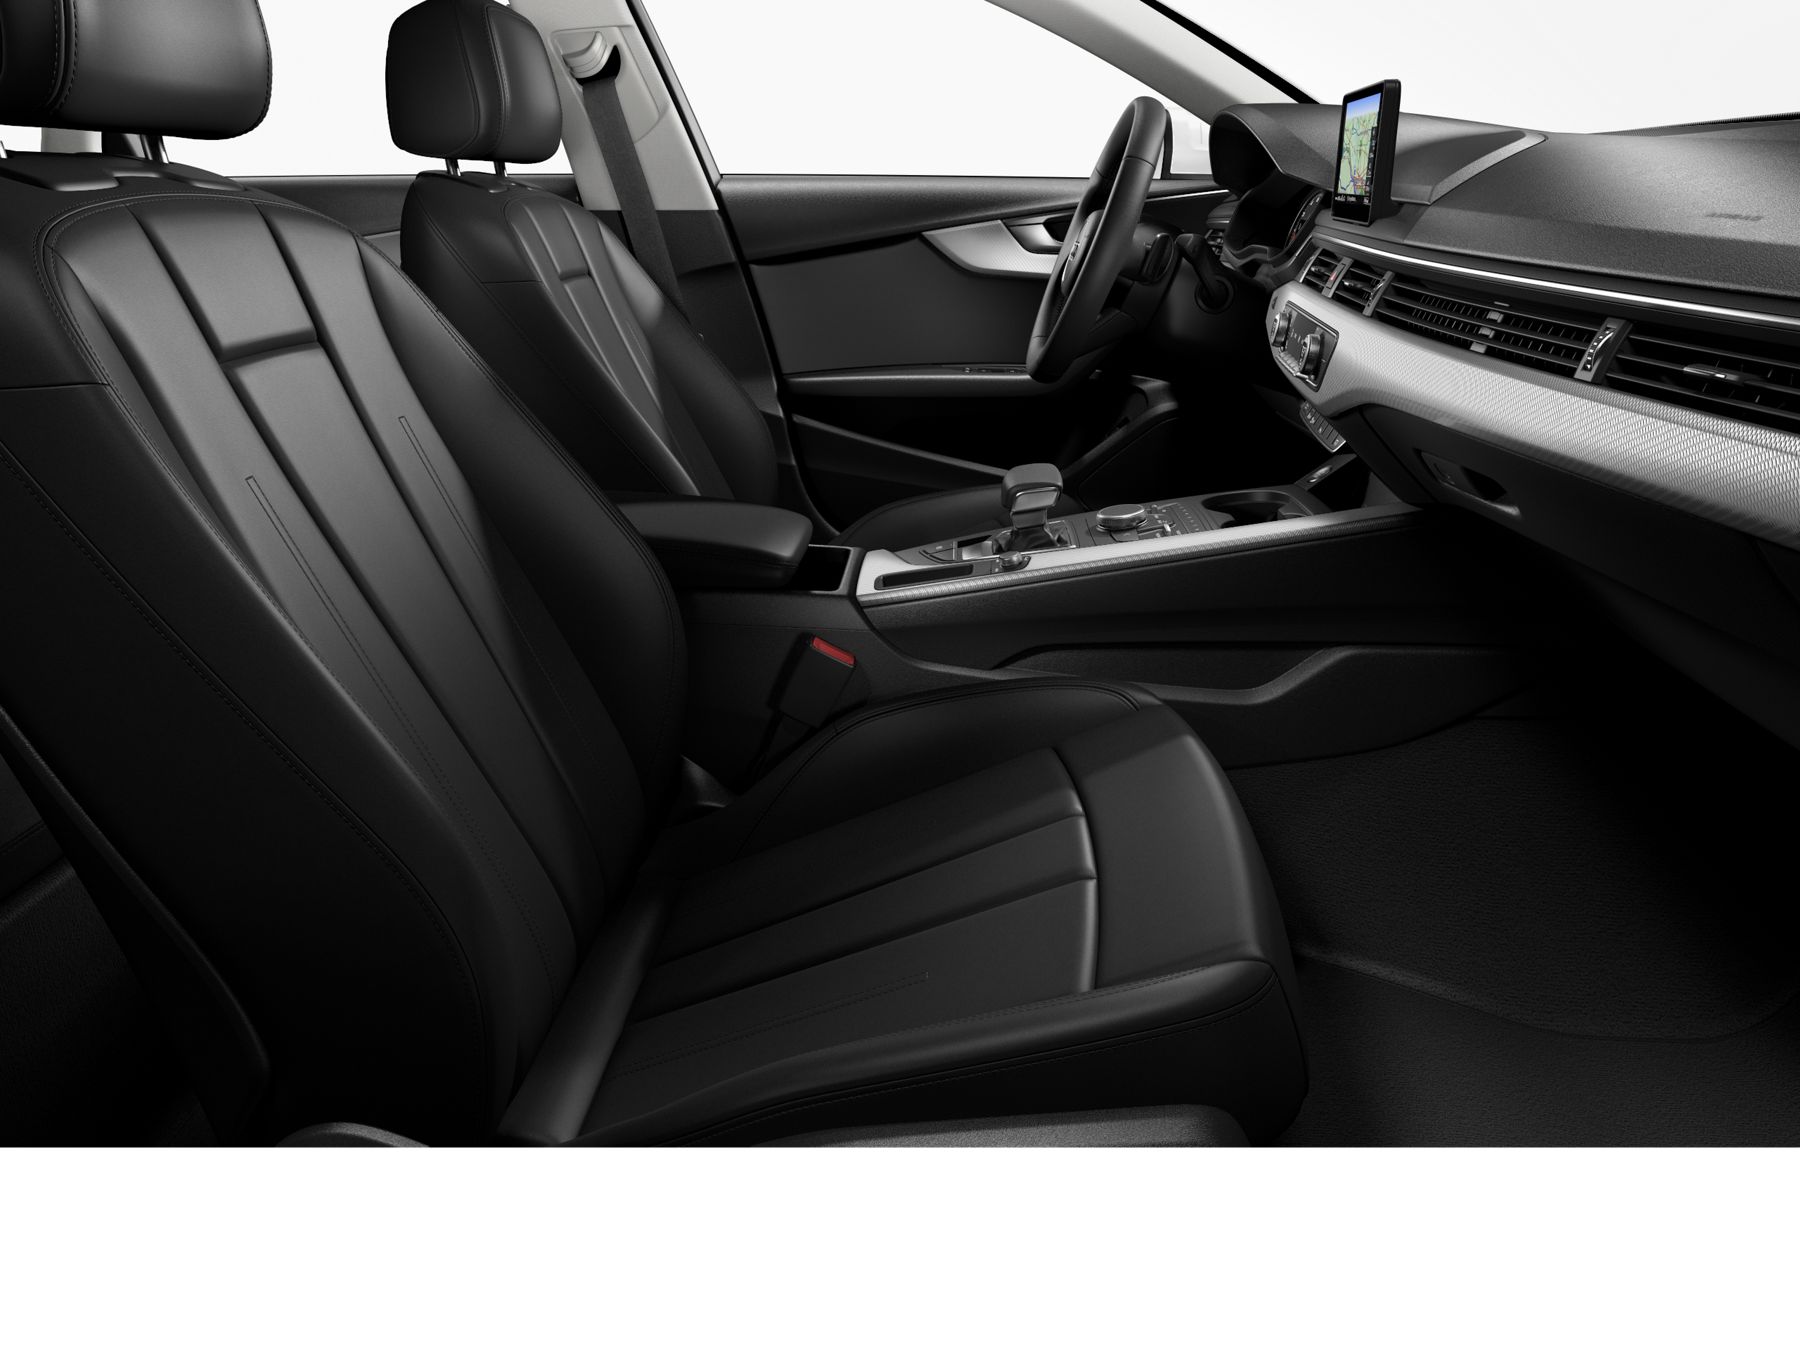 Audi A4 Prestige 2017 side view